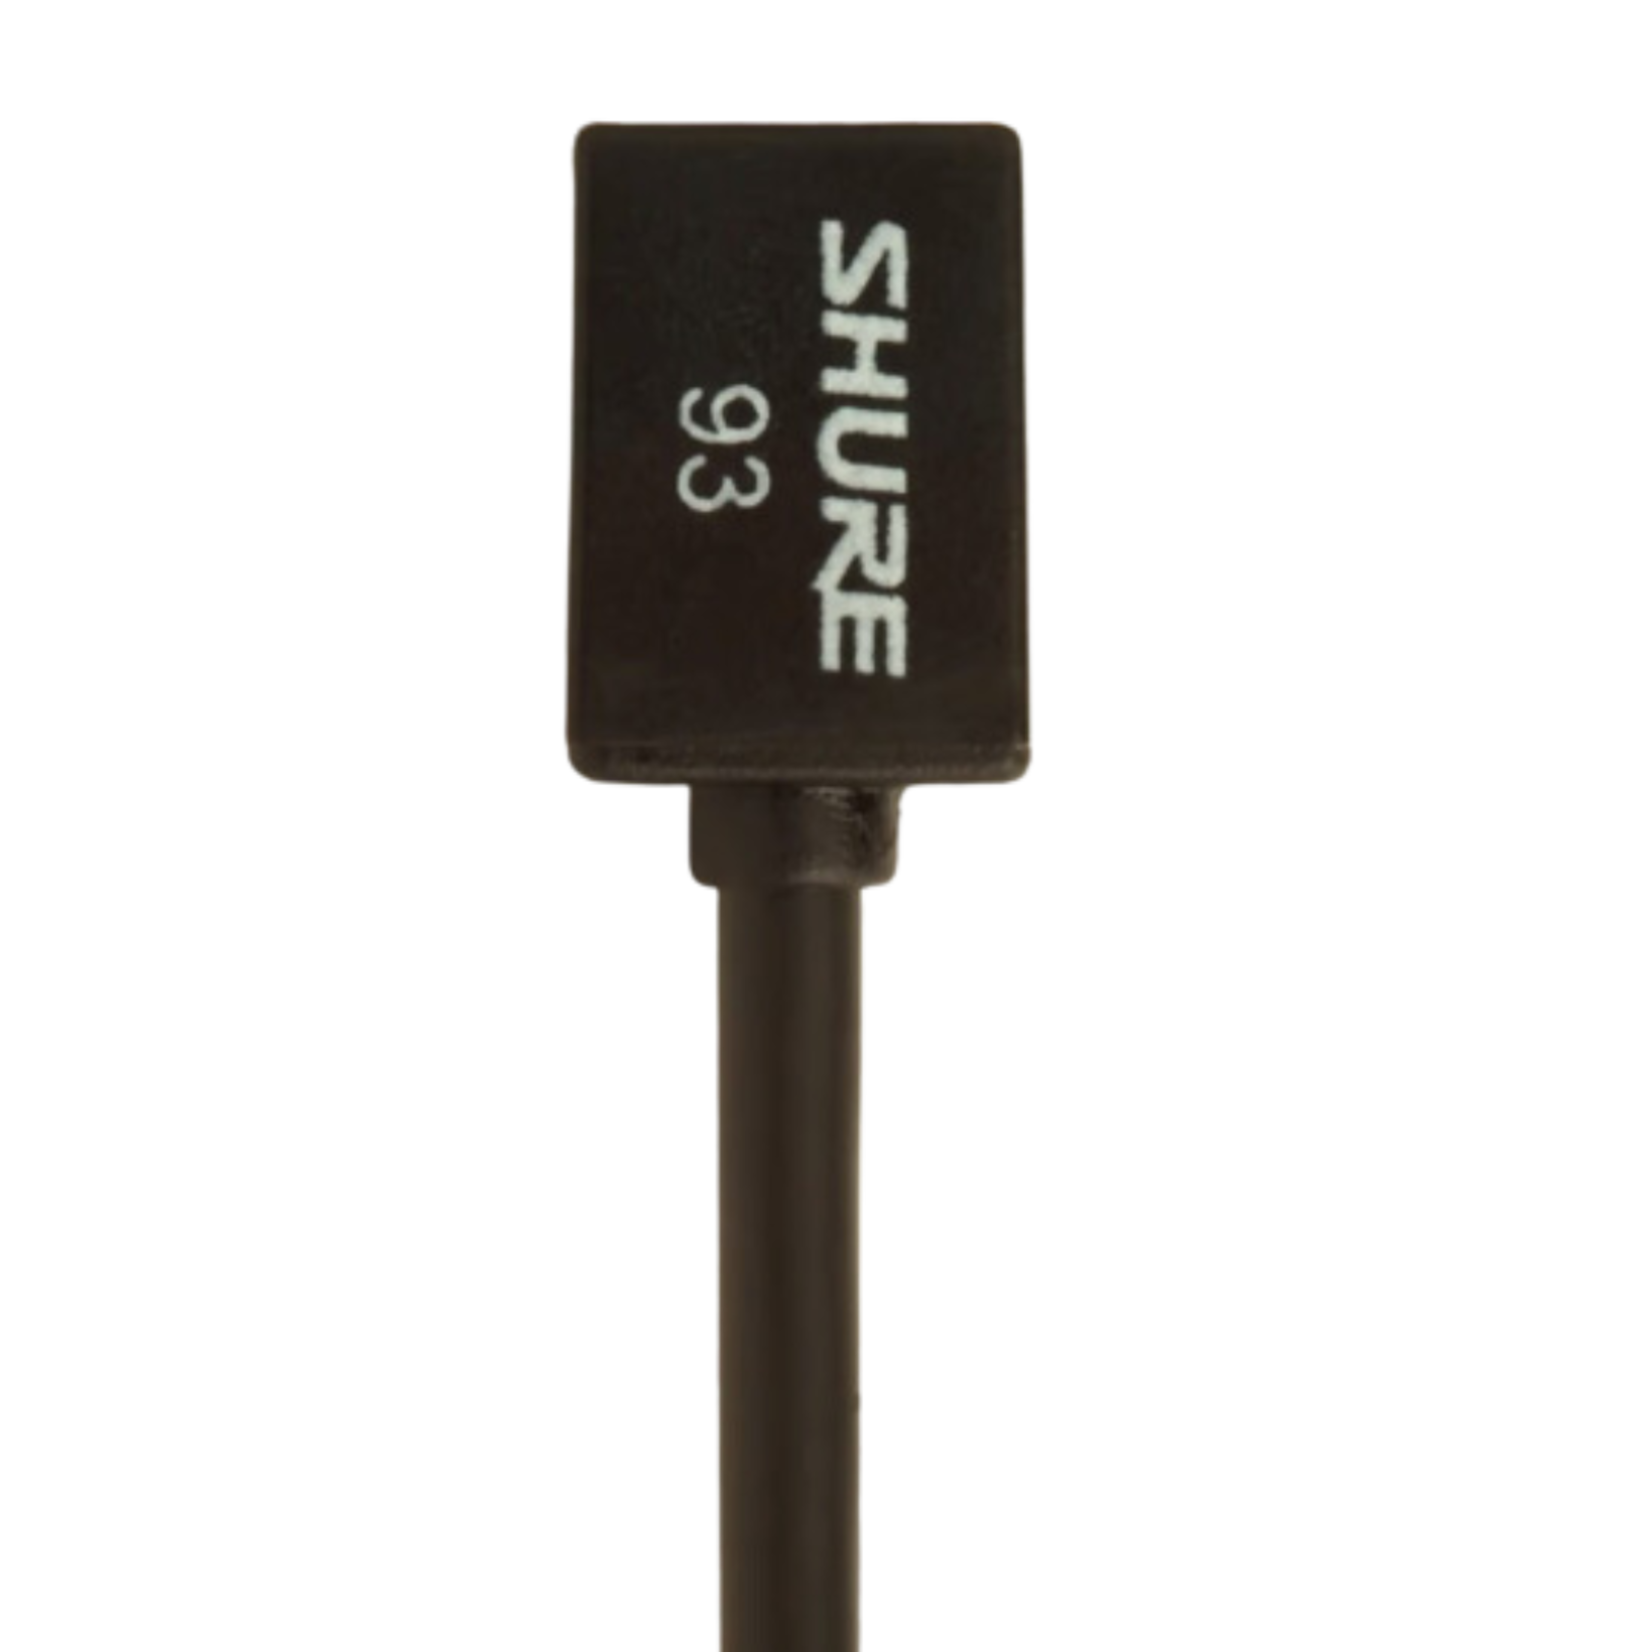 Shure WL93 Lavalier Microphone for Shure Wireless - Black